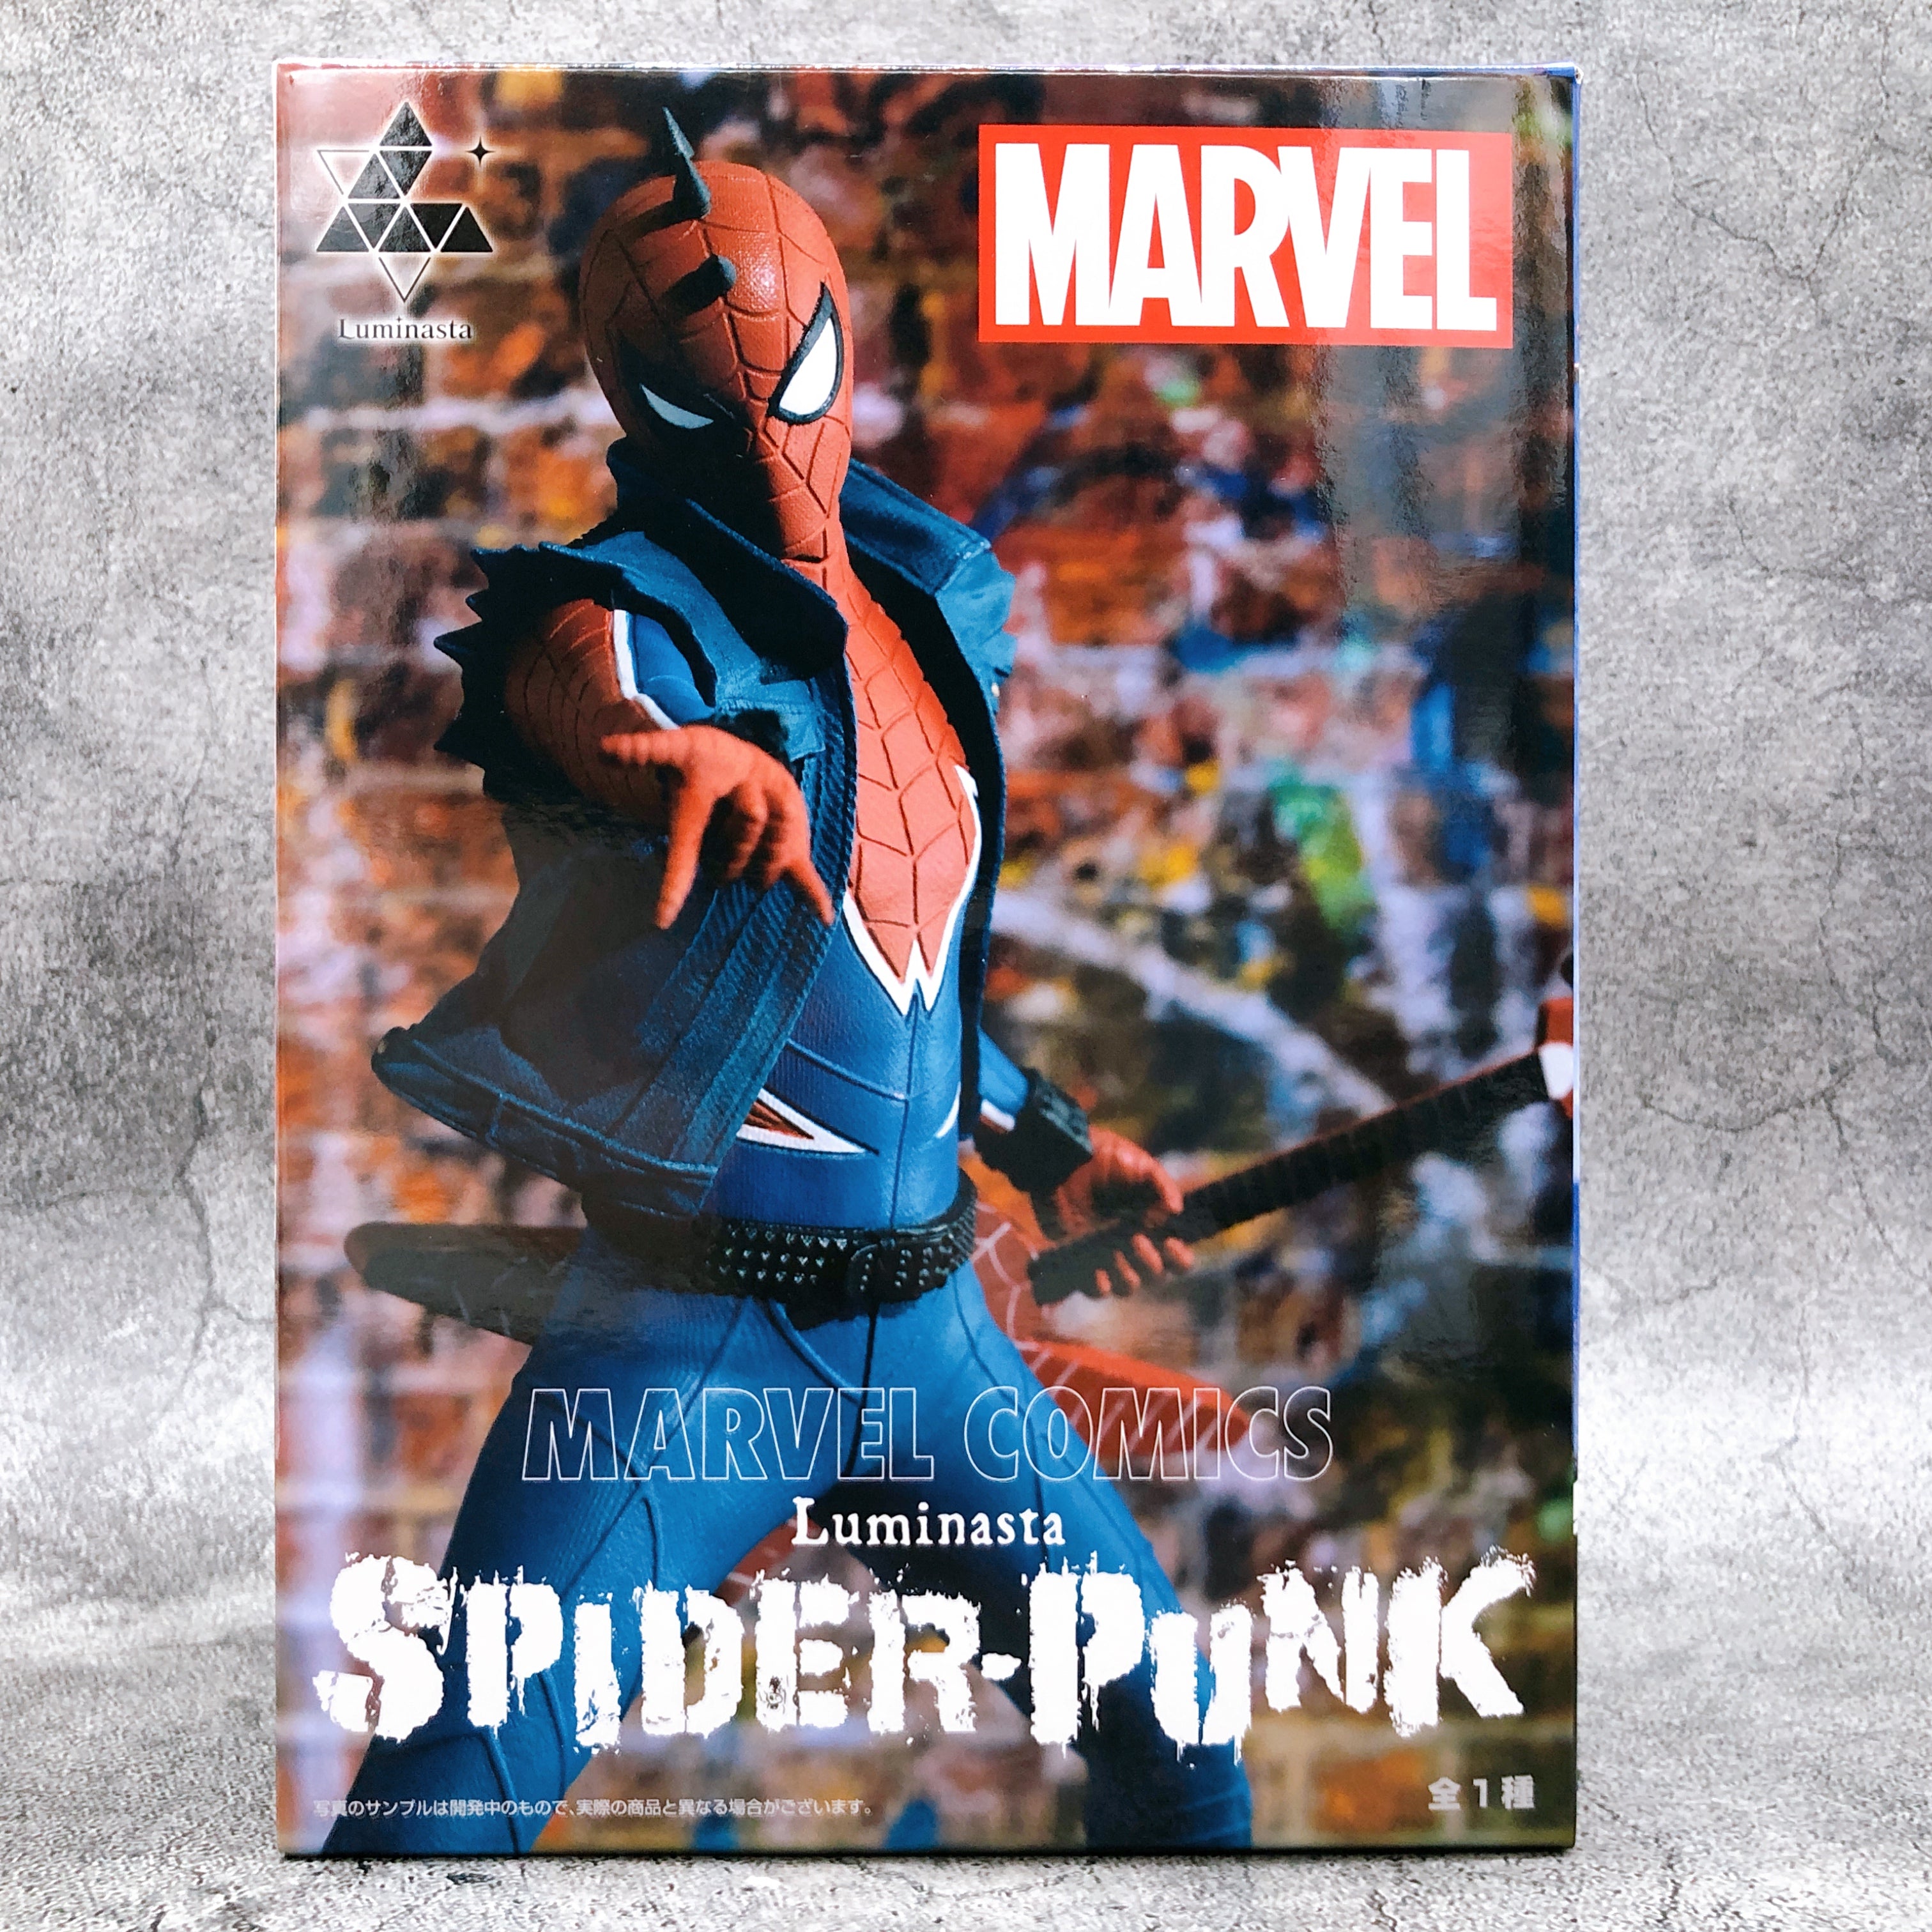 MARVEL COMICS Spider-Punk Luminasta [SEGA]